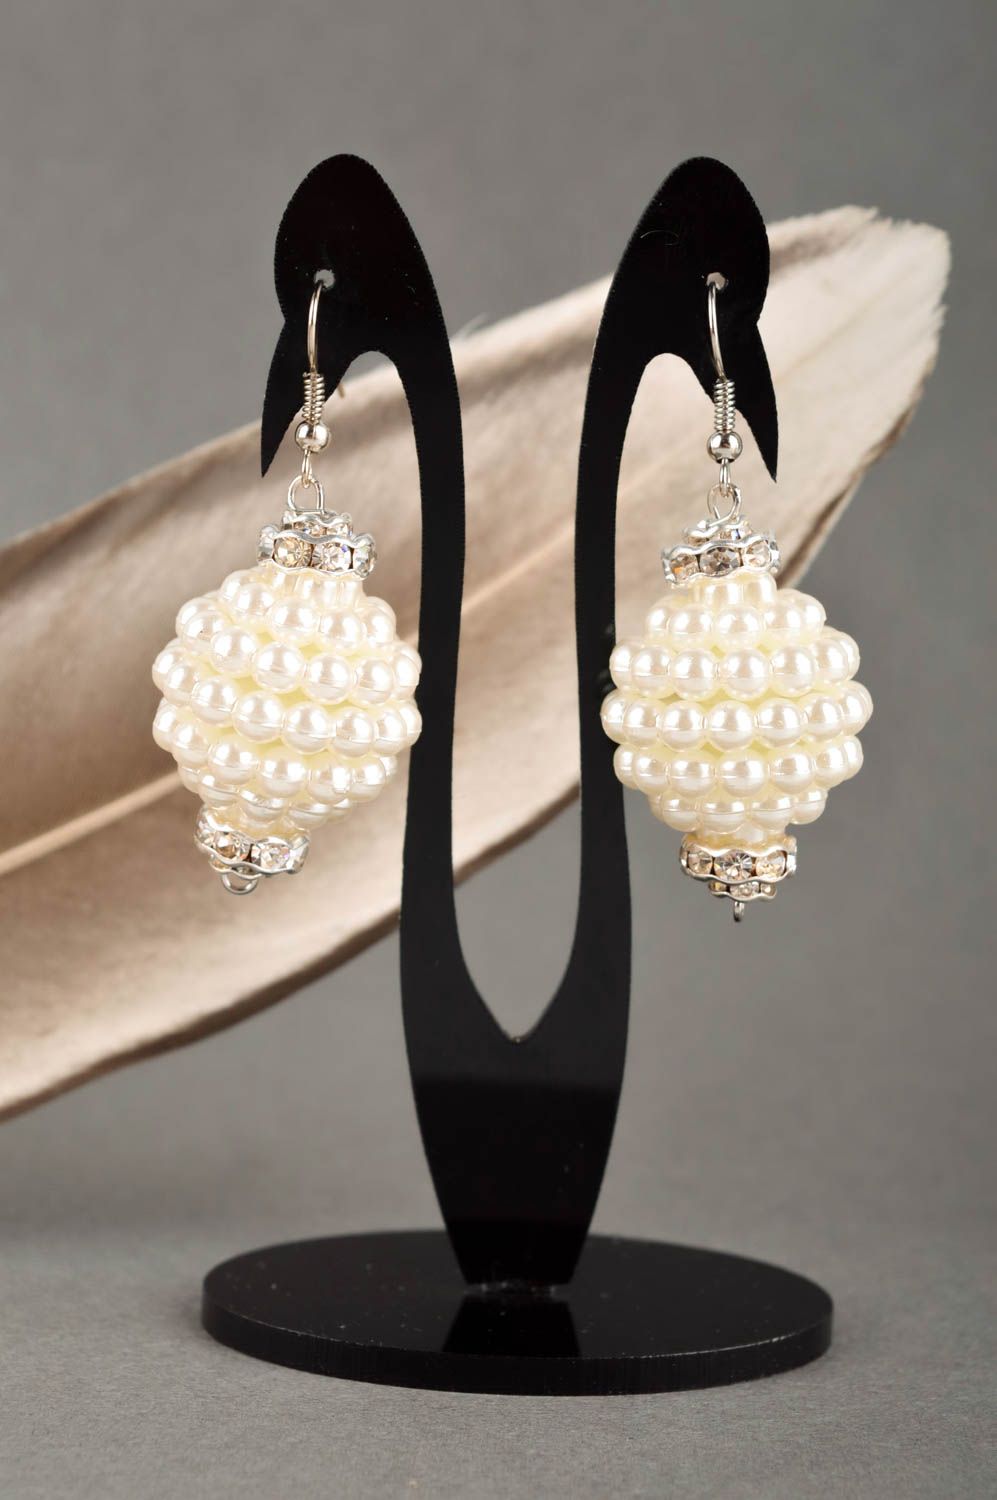 Long beaded earrings handmade earrings with charms fashion jewelry for girls photo 1